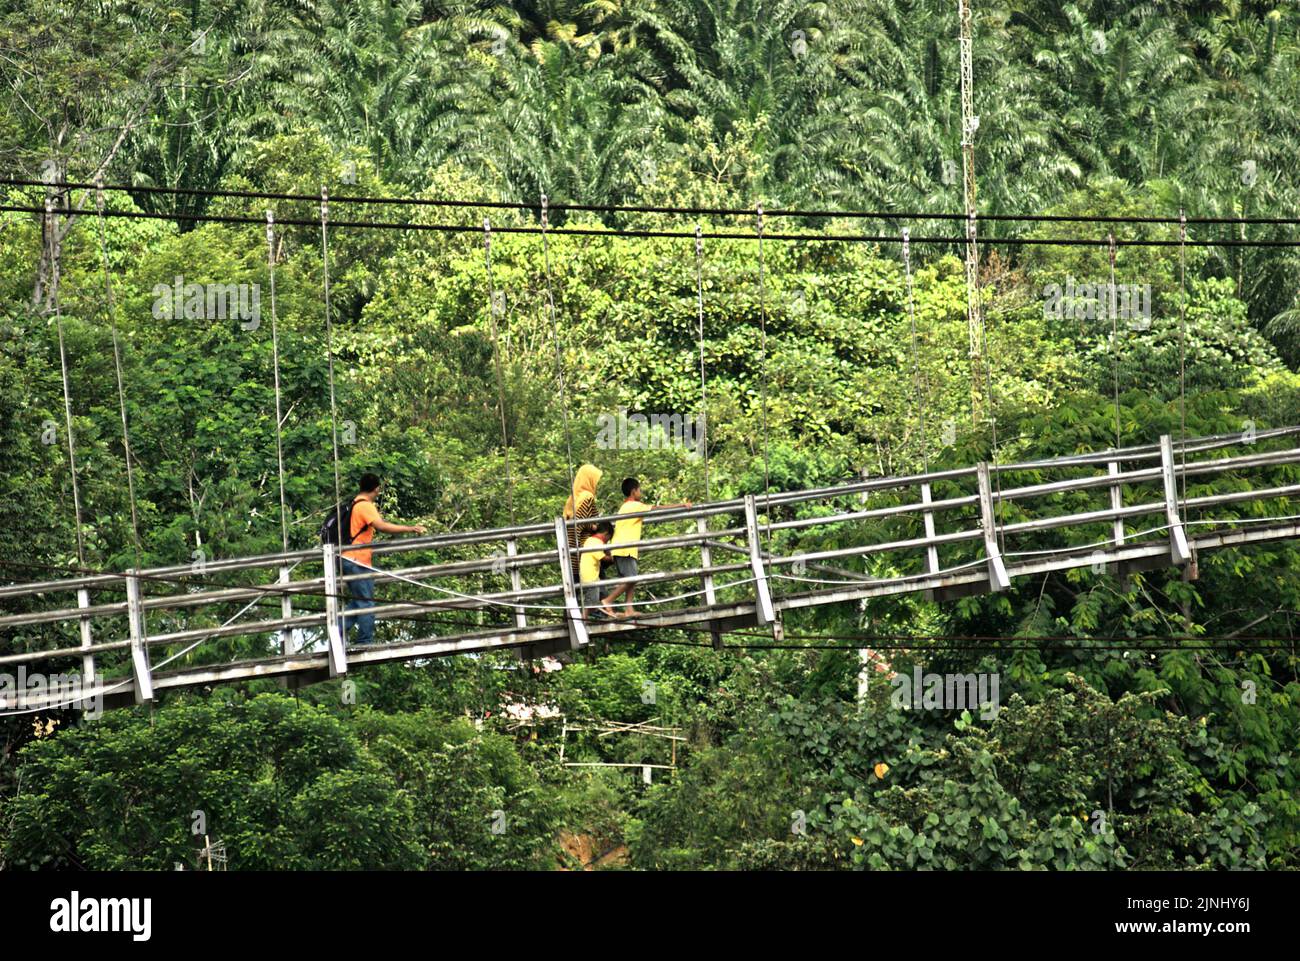 Persone che camminano su un ponte sospeso, attraversando il fiume Bahorok a Bukit Lawang, Bahorok, Langkat, Sumatra settentrionale, Indonesia. Foto Stock